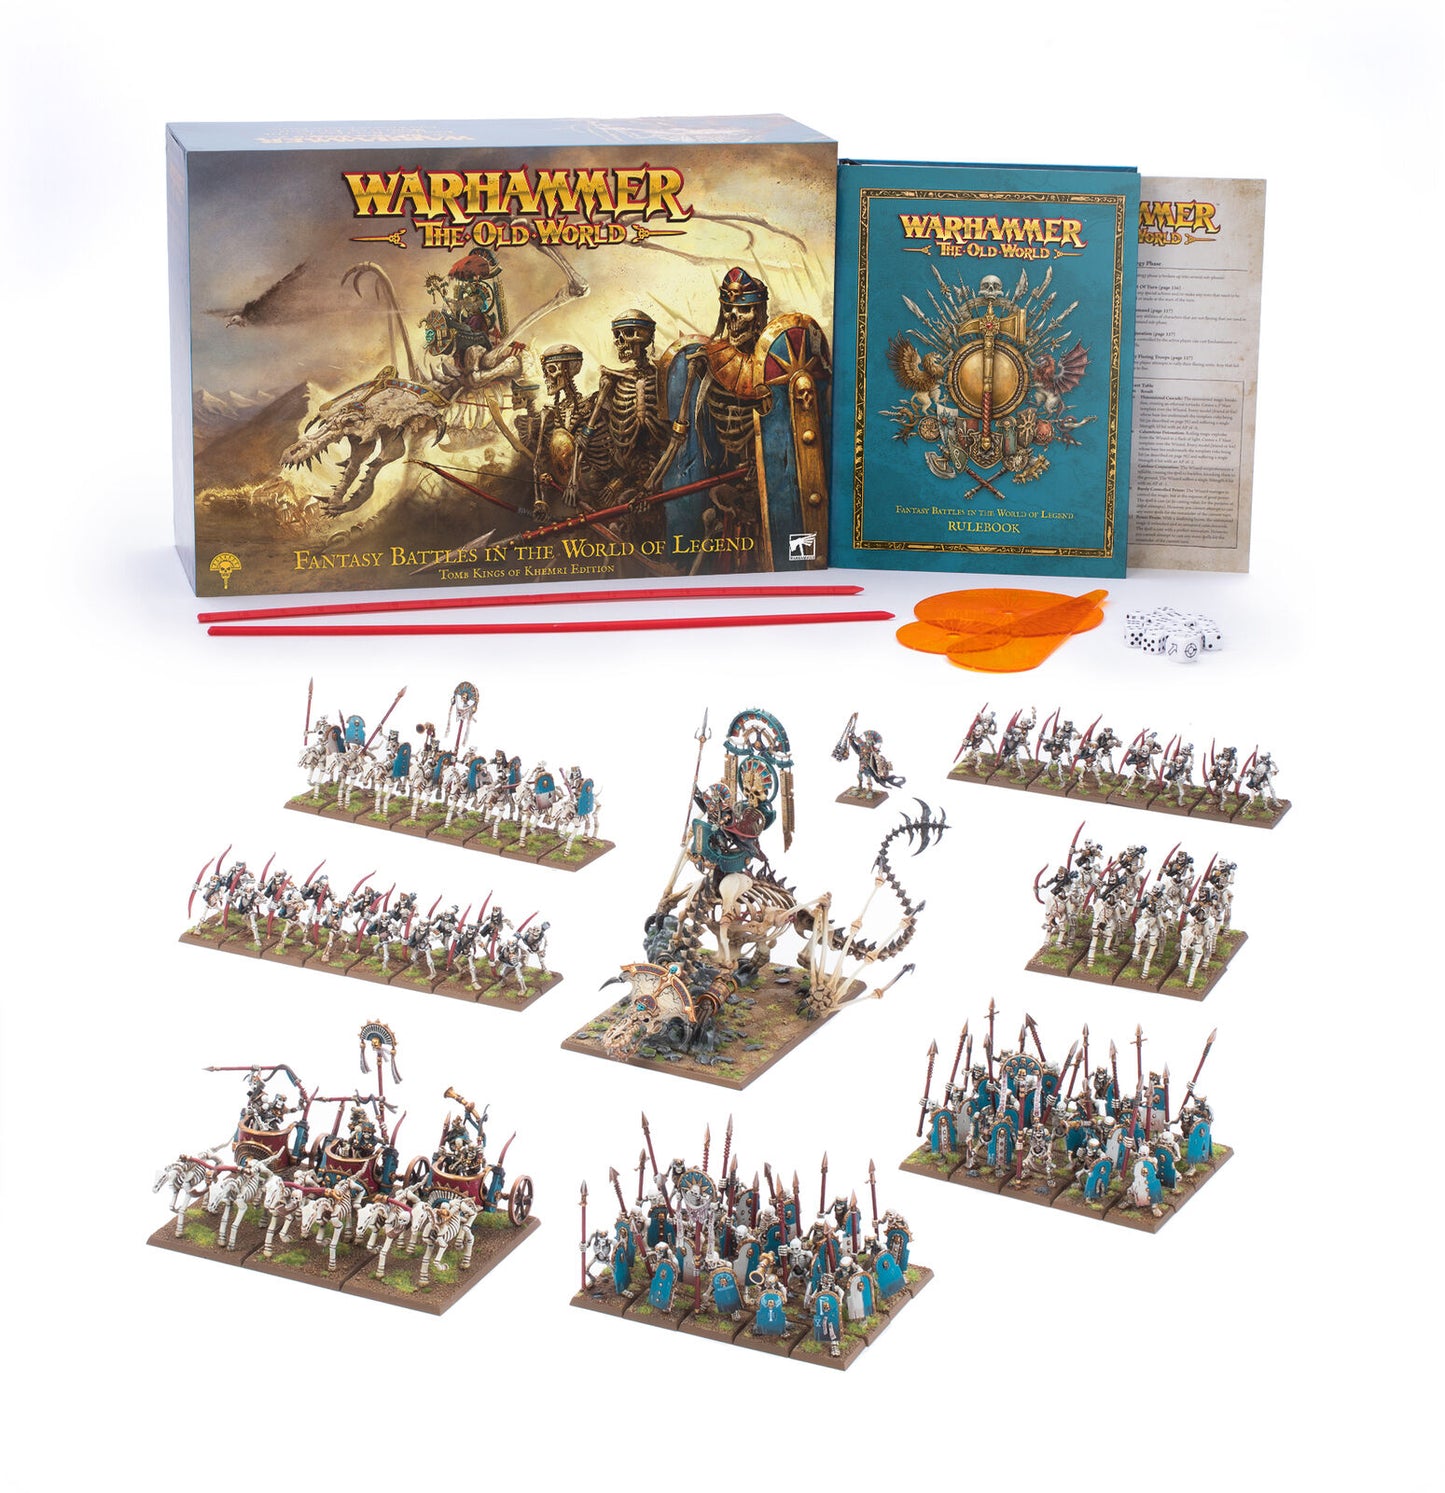 Warhammer: The Old World Core Set – Tomb Kings of Khemri Box